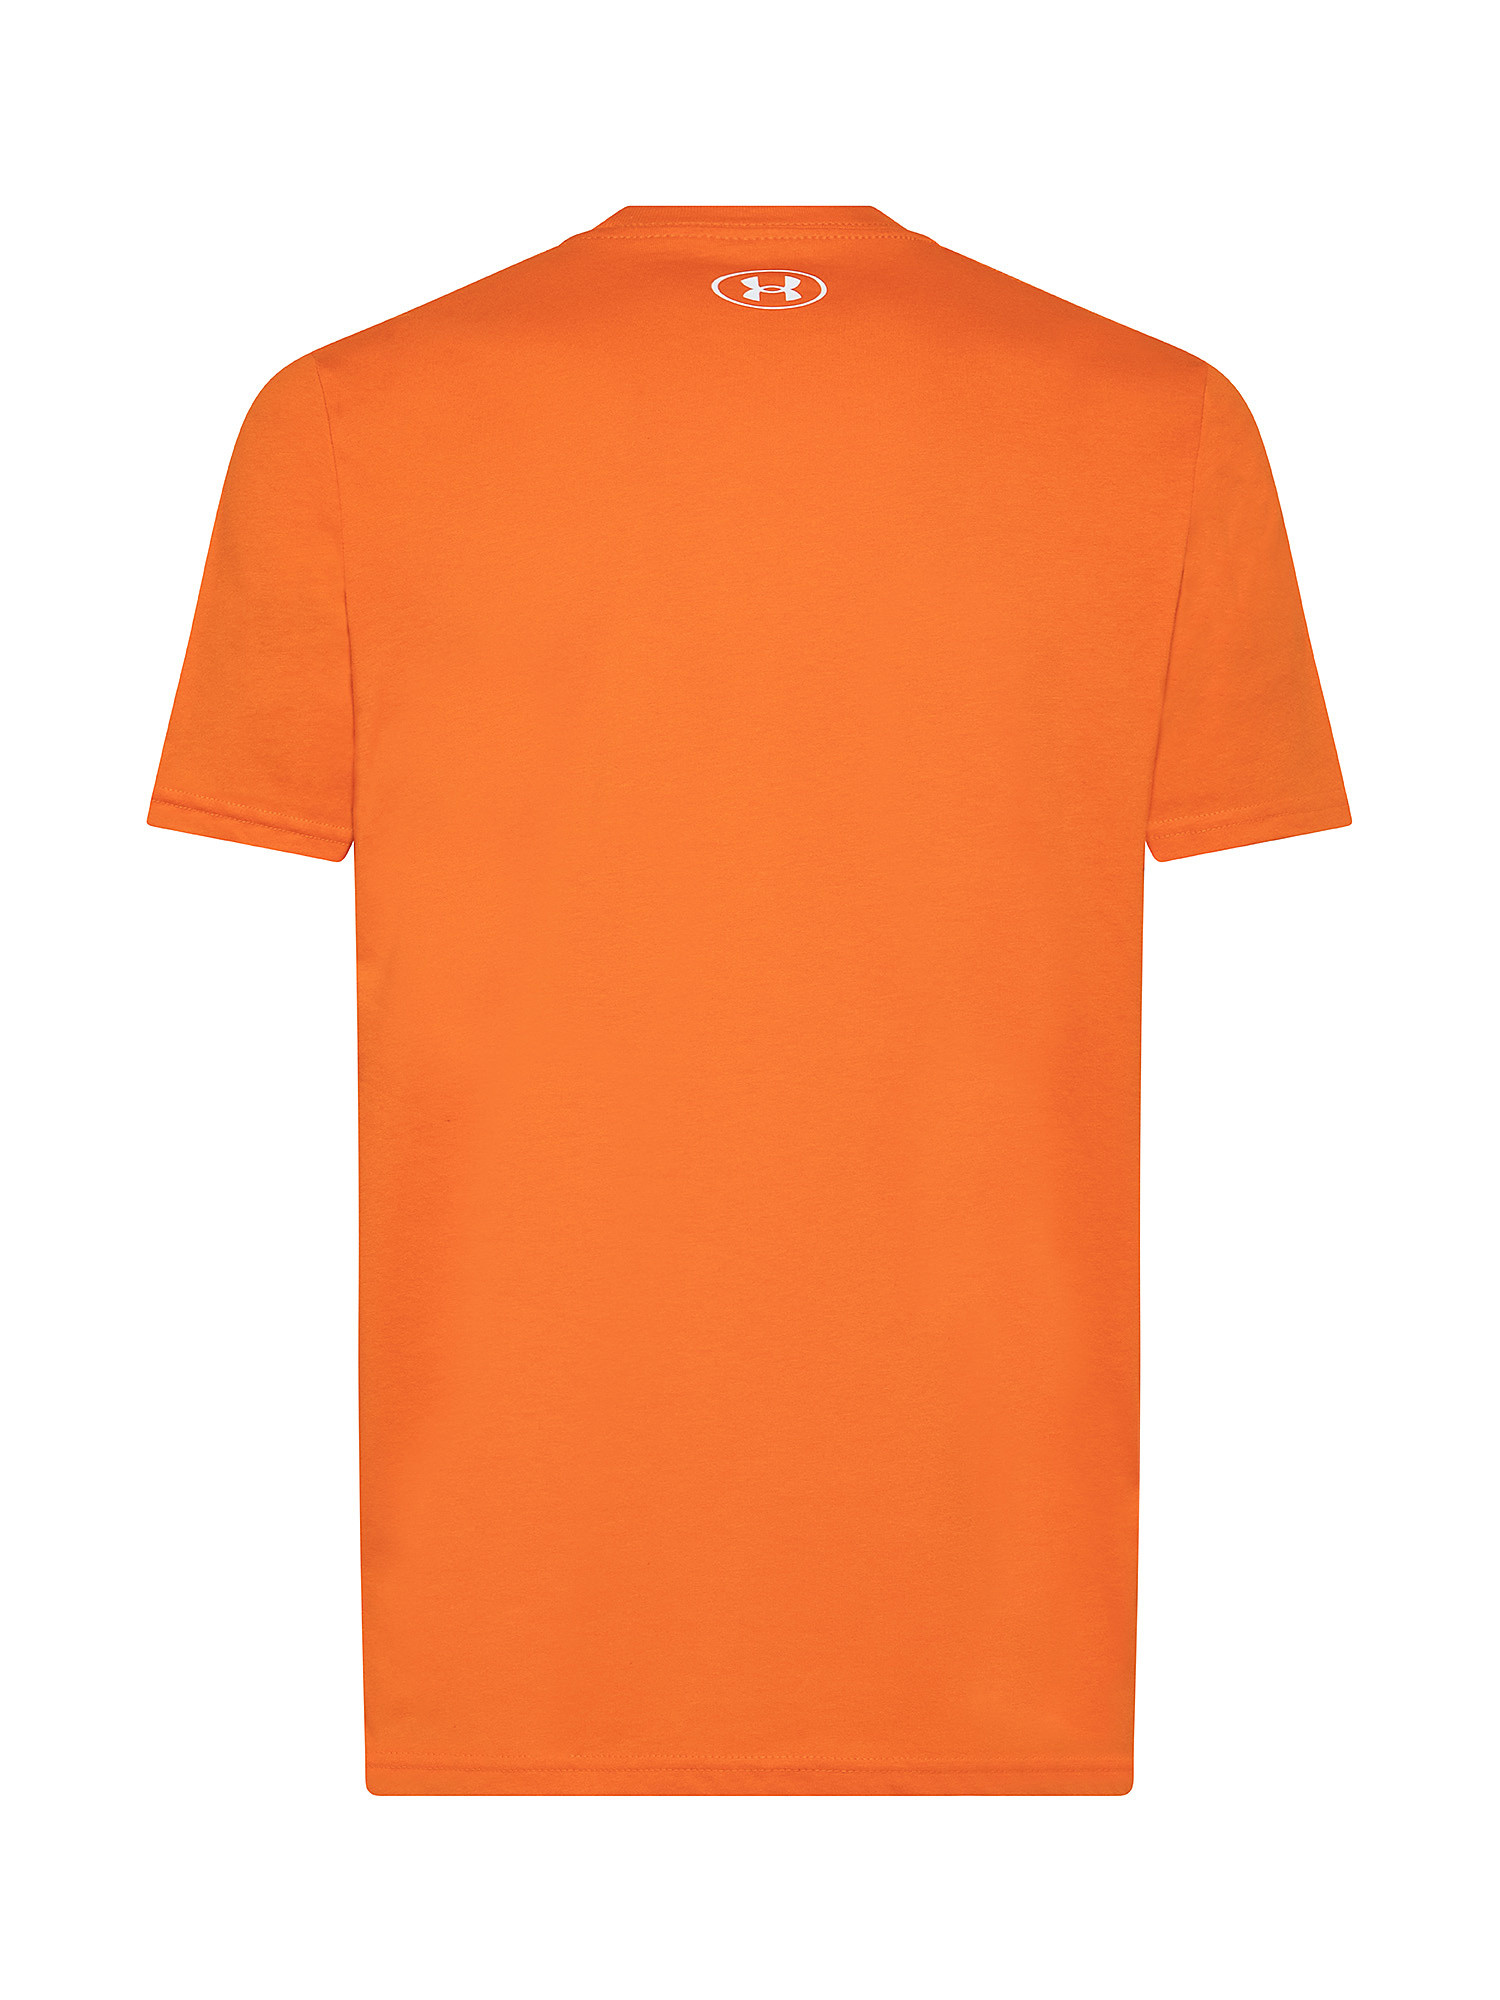 T-shirt grafica, Arancione, large image number 1